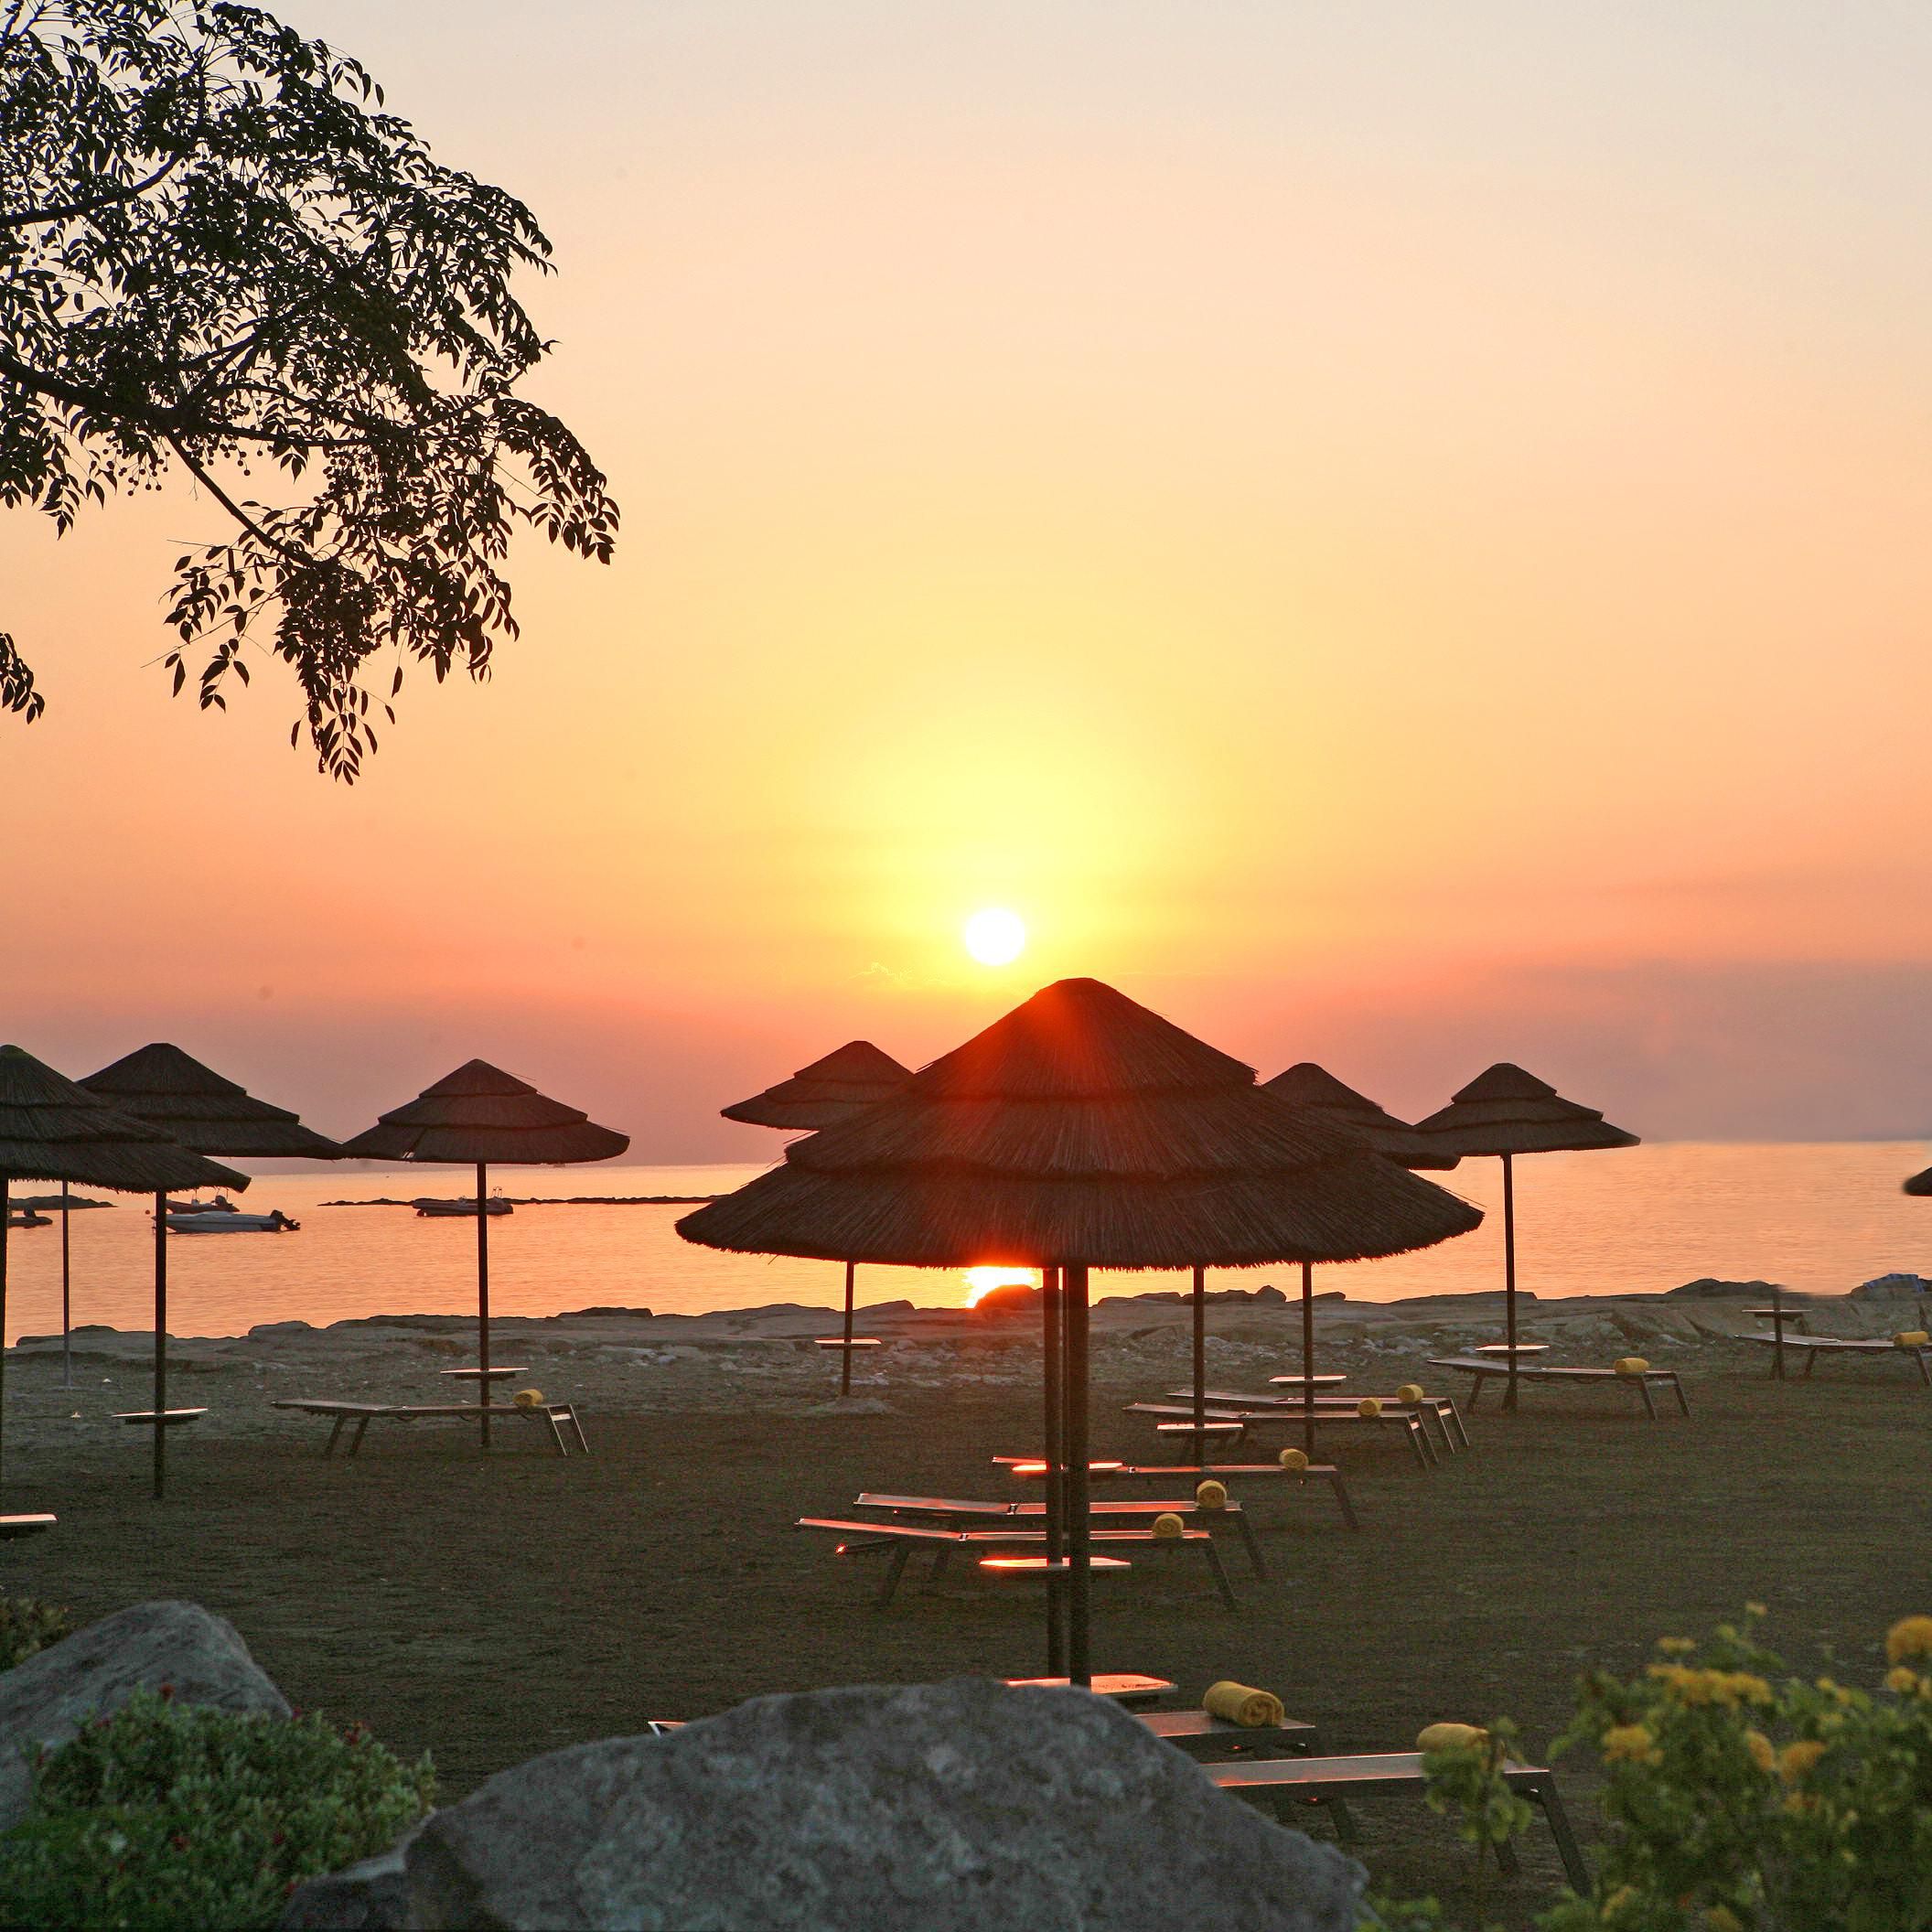 Crowne Plaza Limassol beach at sunrise 